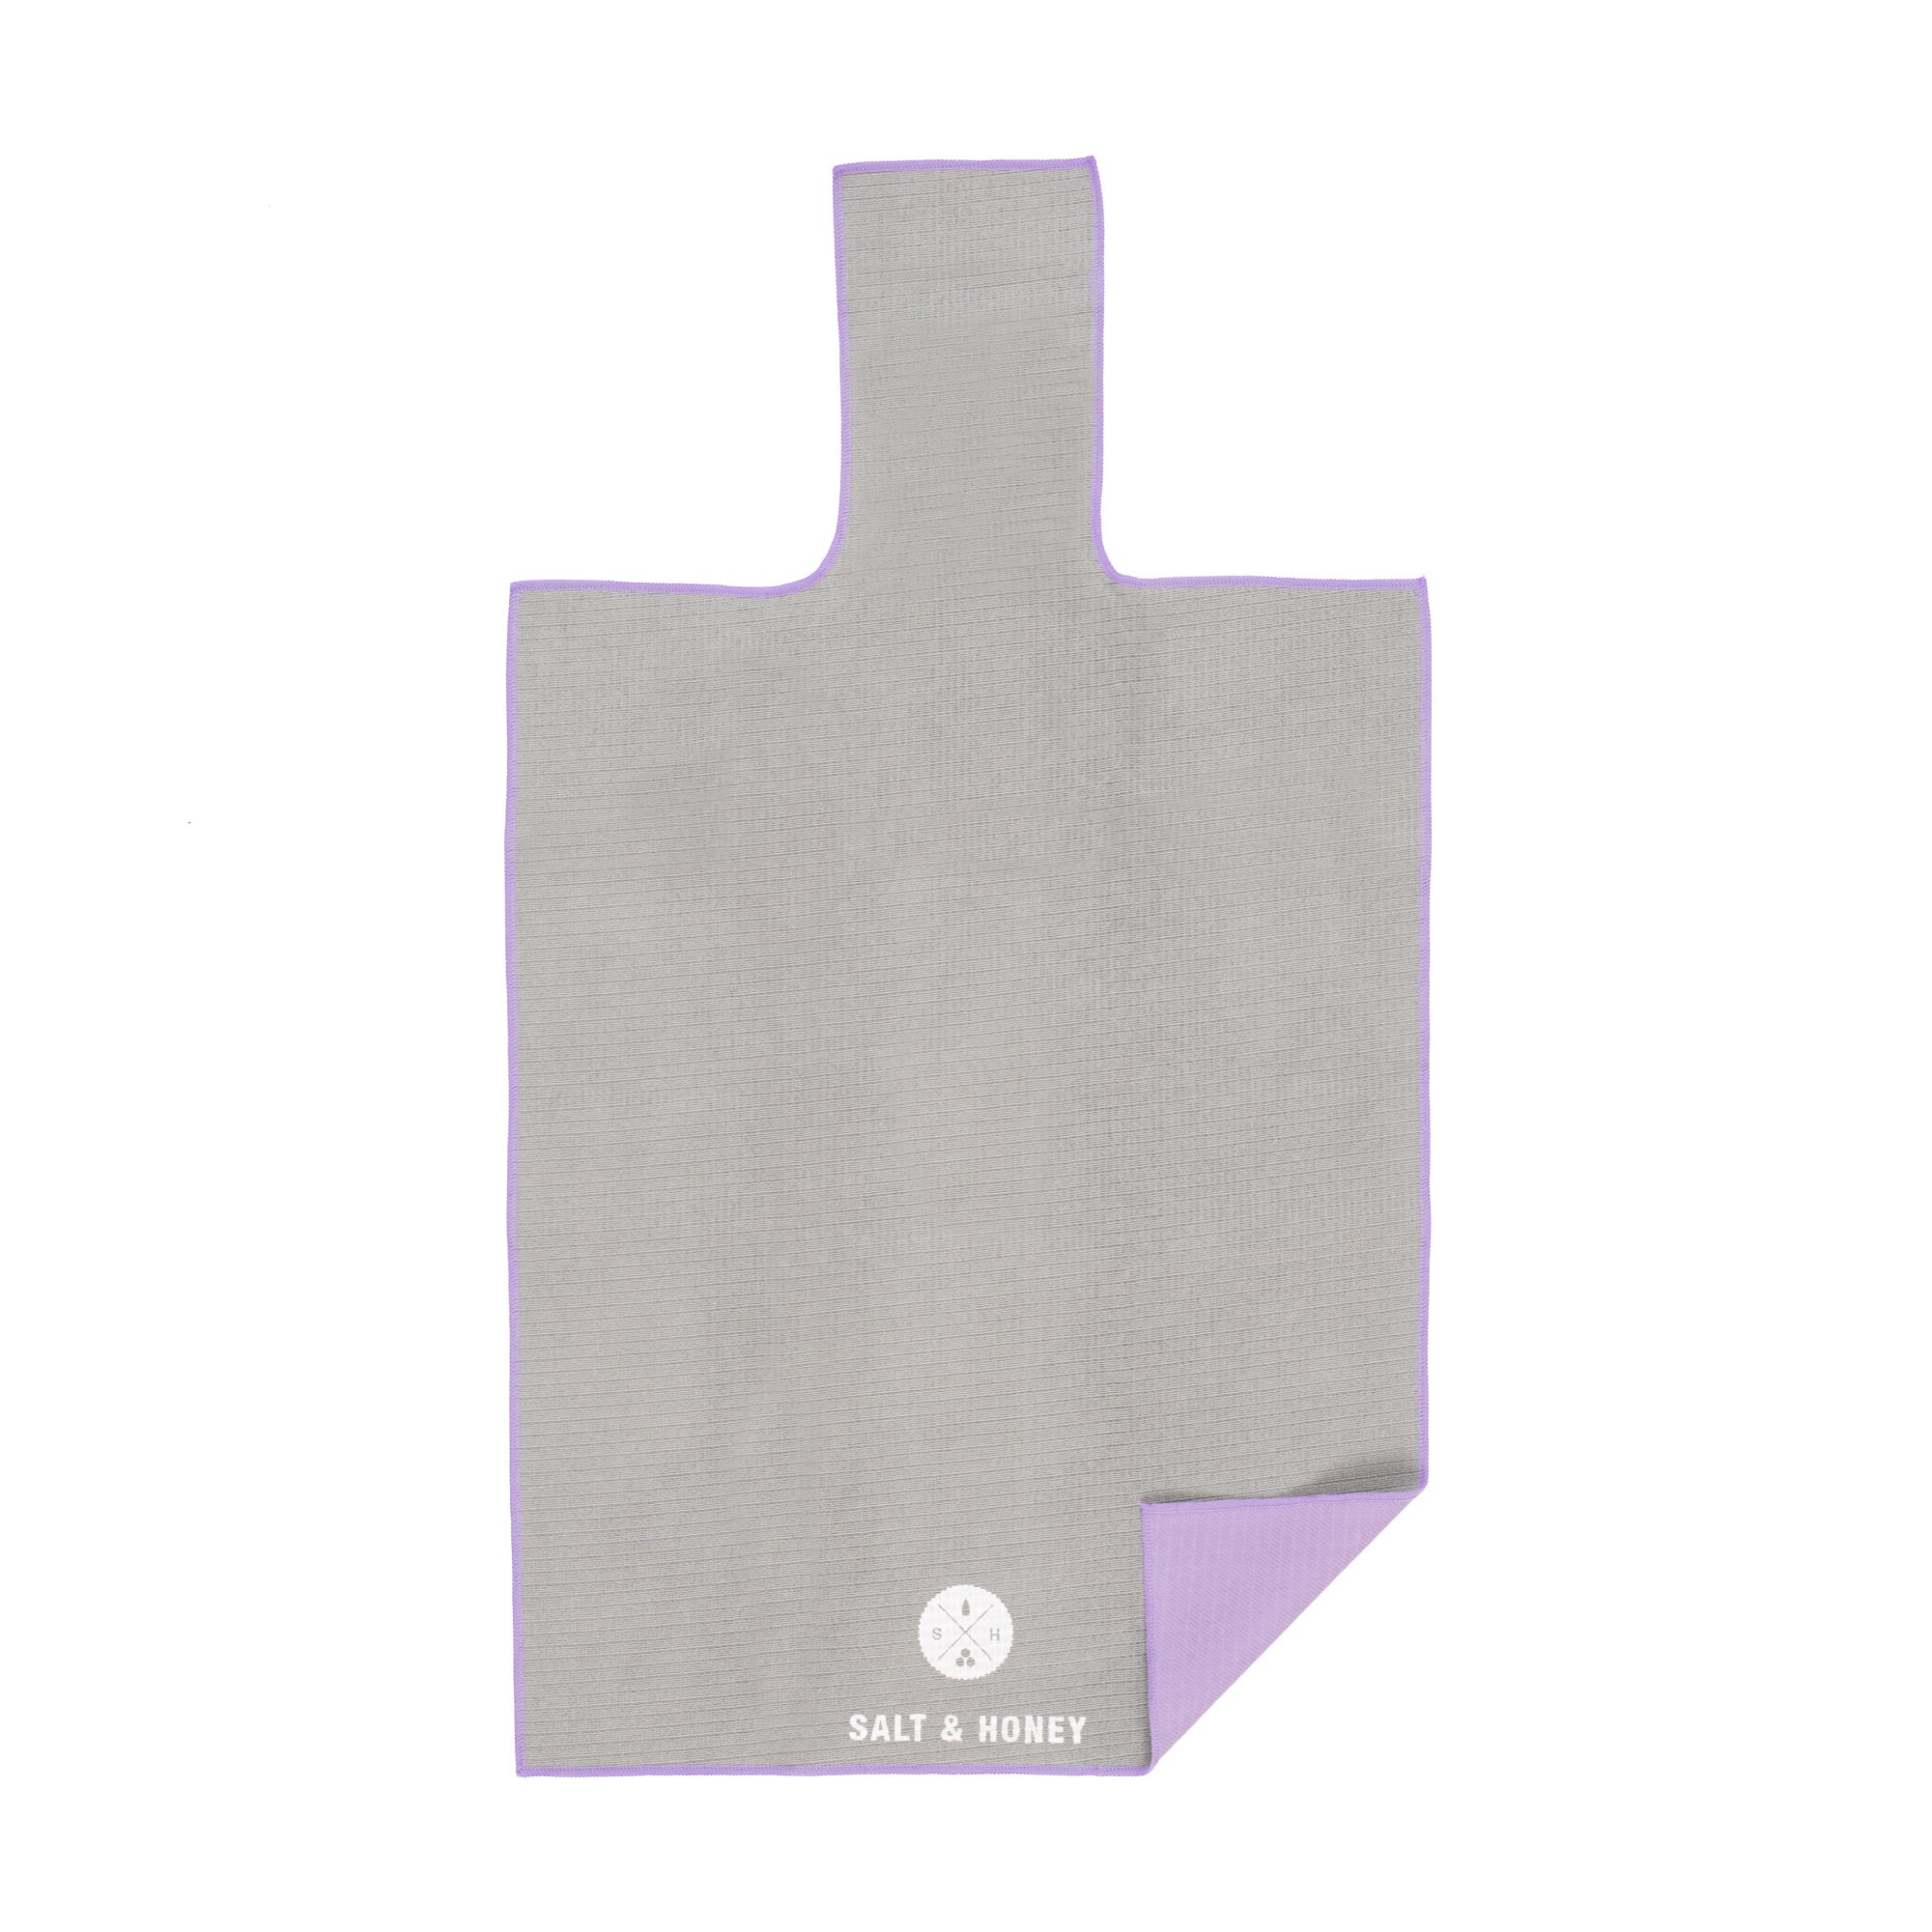 Pilates Reformer Non-Slip Mat Towel (Included 2 Pcs Shoulder Block Covers)  (NAVY BLUE), Mat Towels -  Canada